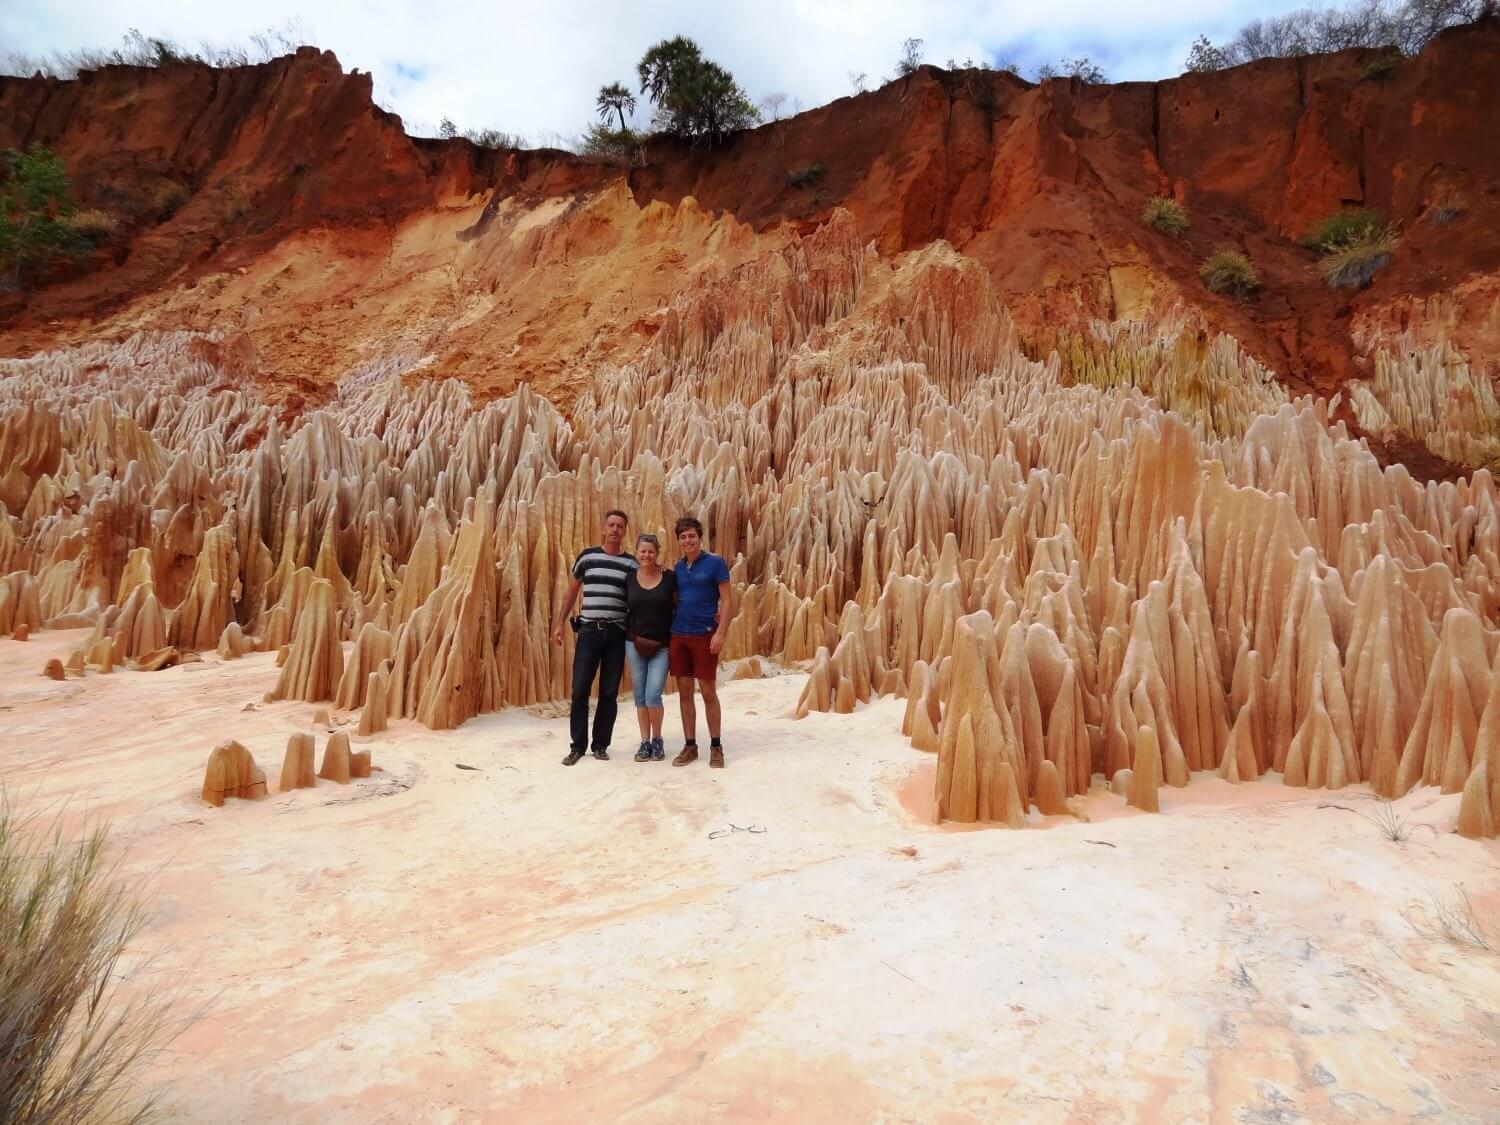 Madagascar Red Tsinghys